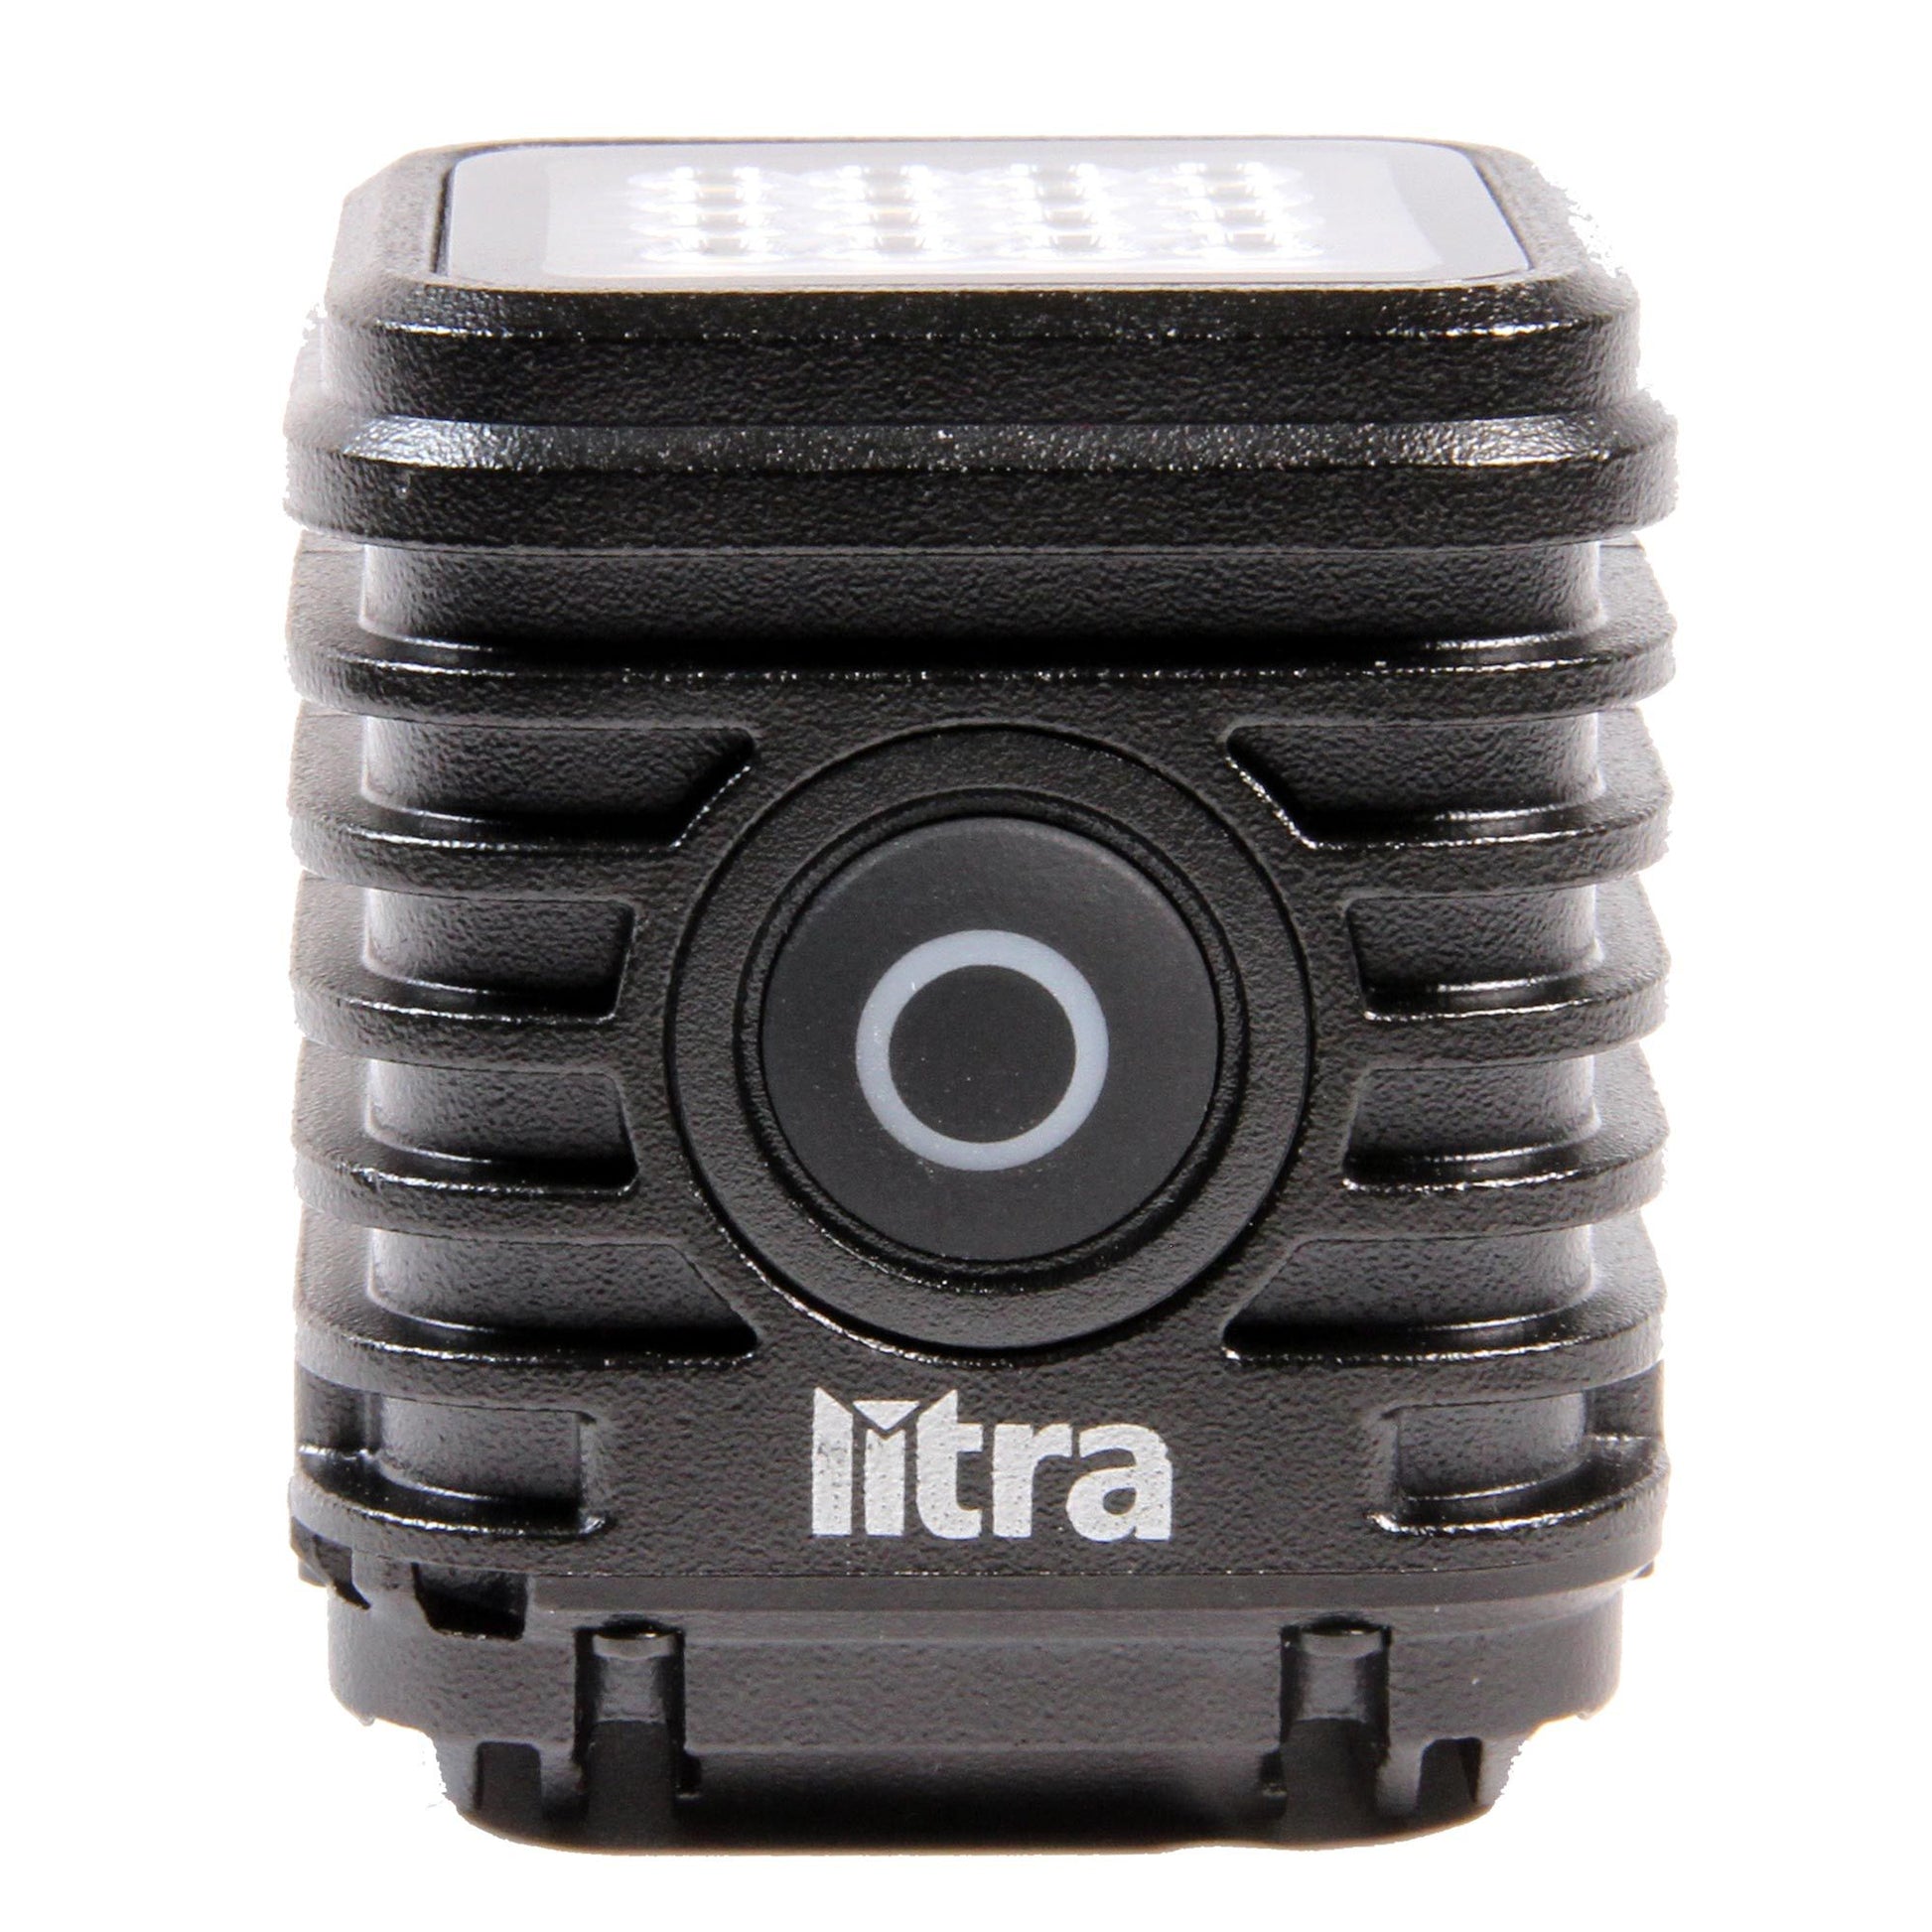 Litra LT2202 Torch 2.0 Waterproof Pro LED.